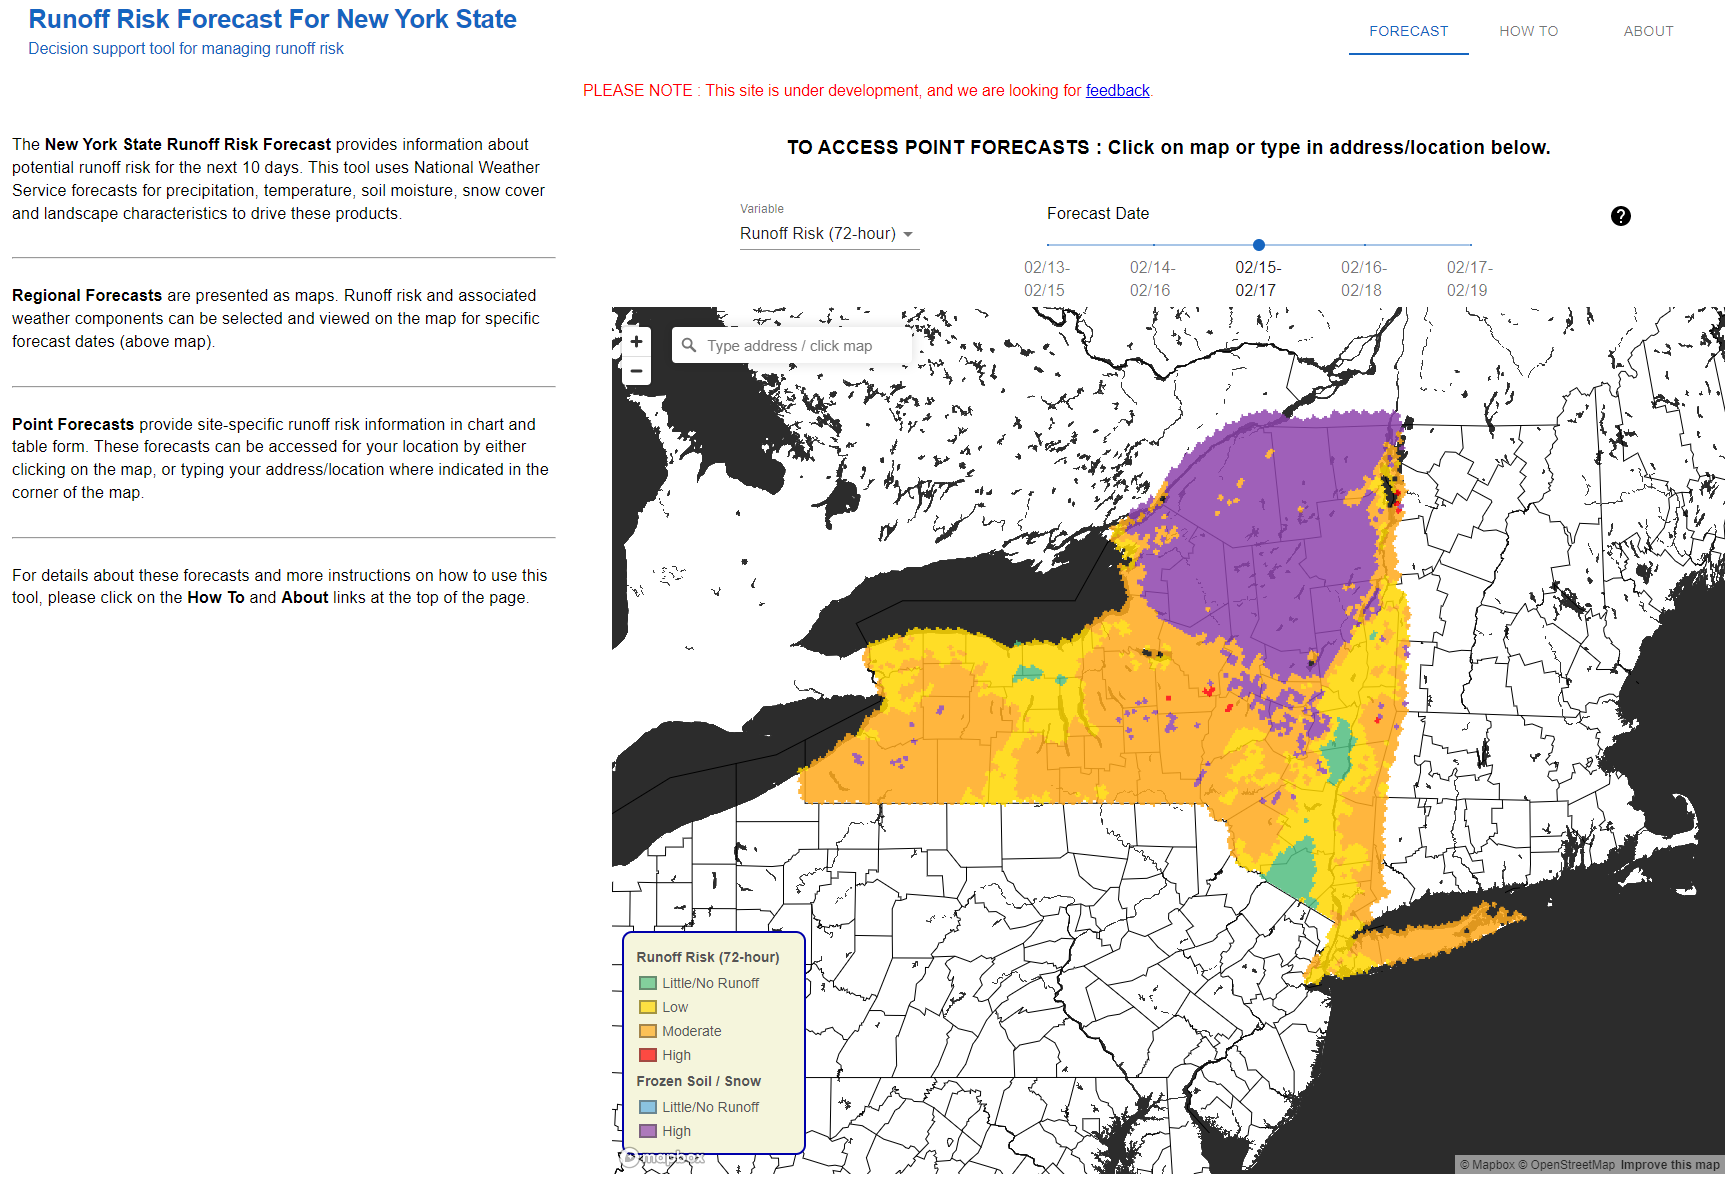 New York Runoff Risk tool hosted by Cornell University